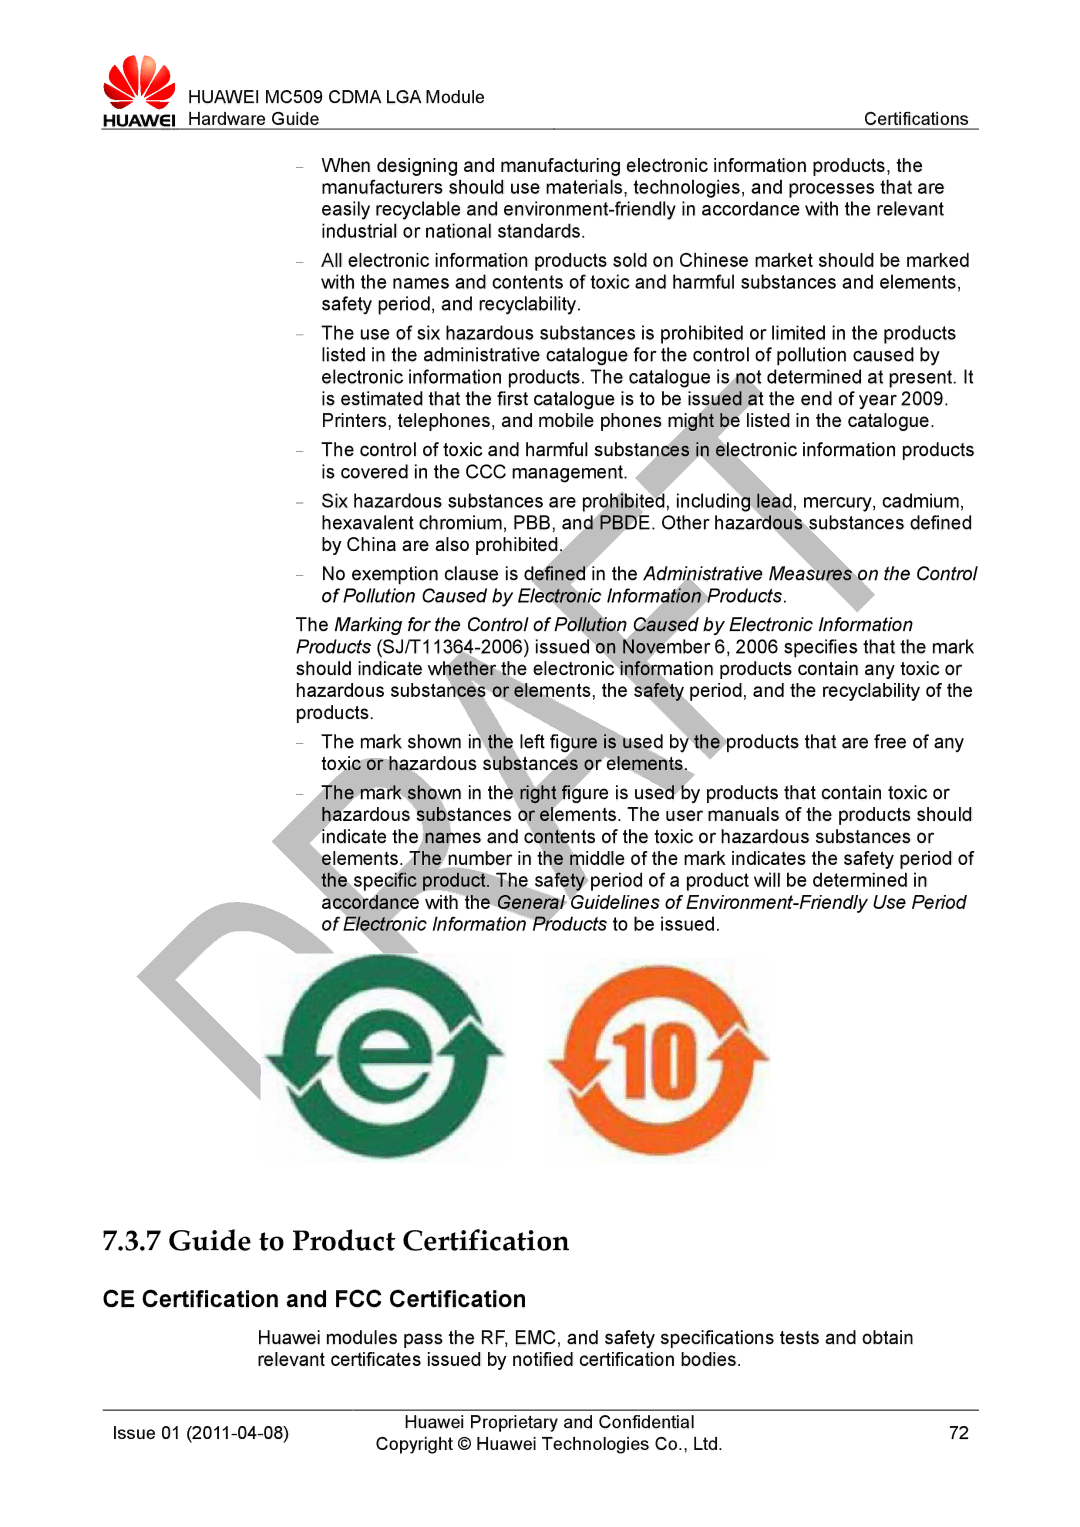 Huawei MC509 CDMA LGA manual Guide to Product Certification, CE Certification and FCC Certification 